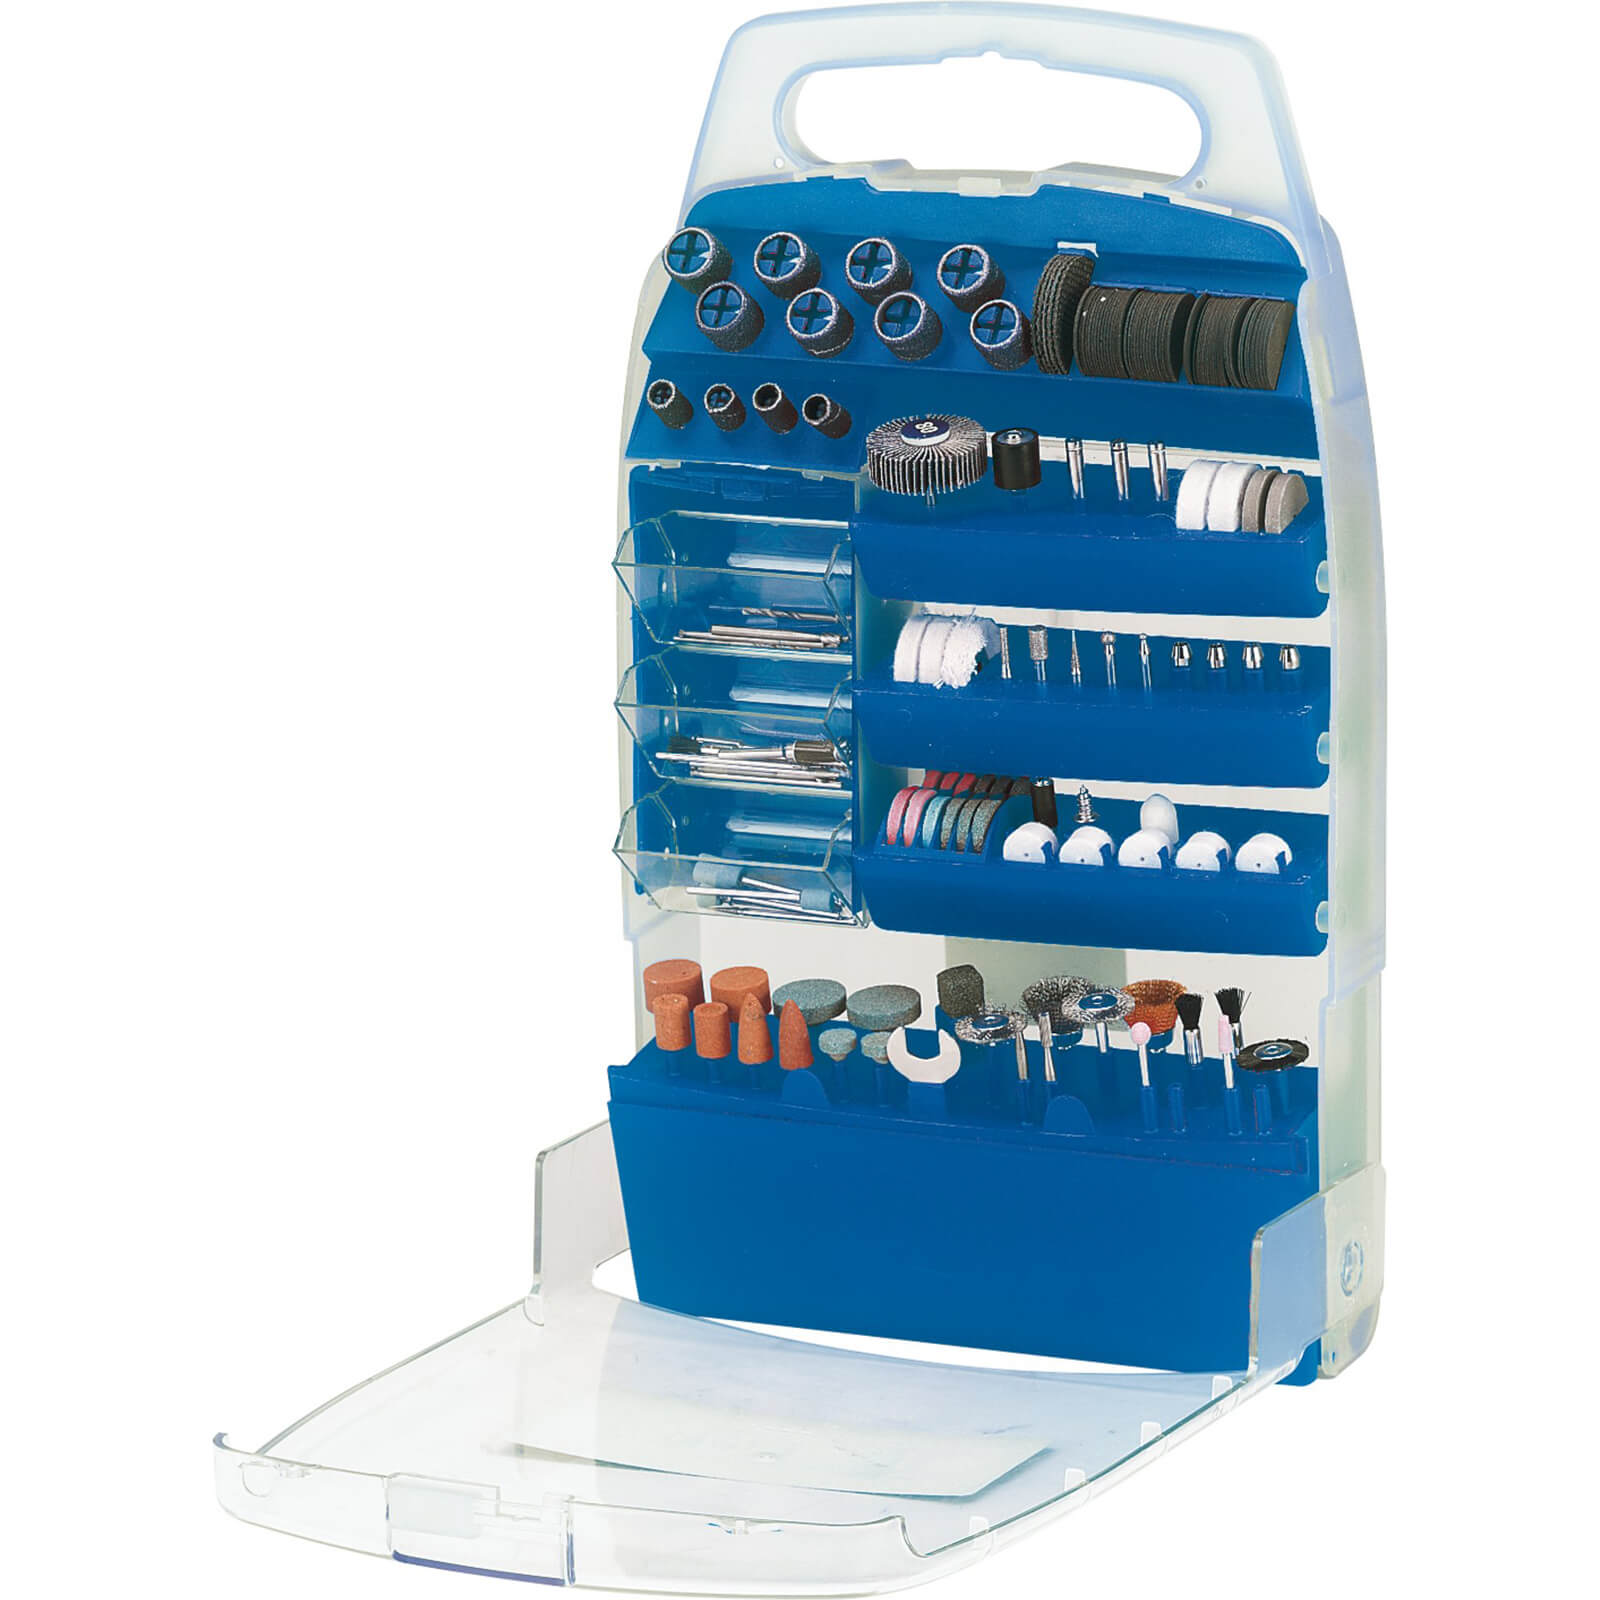 Photo of Draper 200 Piece Rotary Multi Tool Accessory Kit